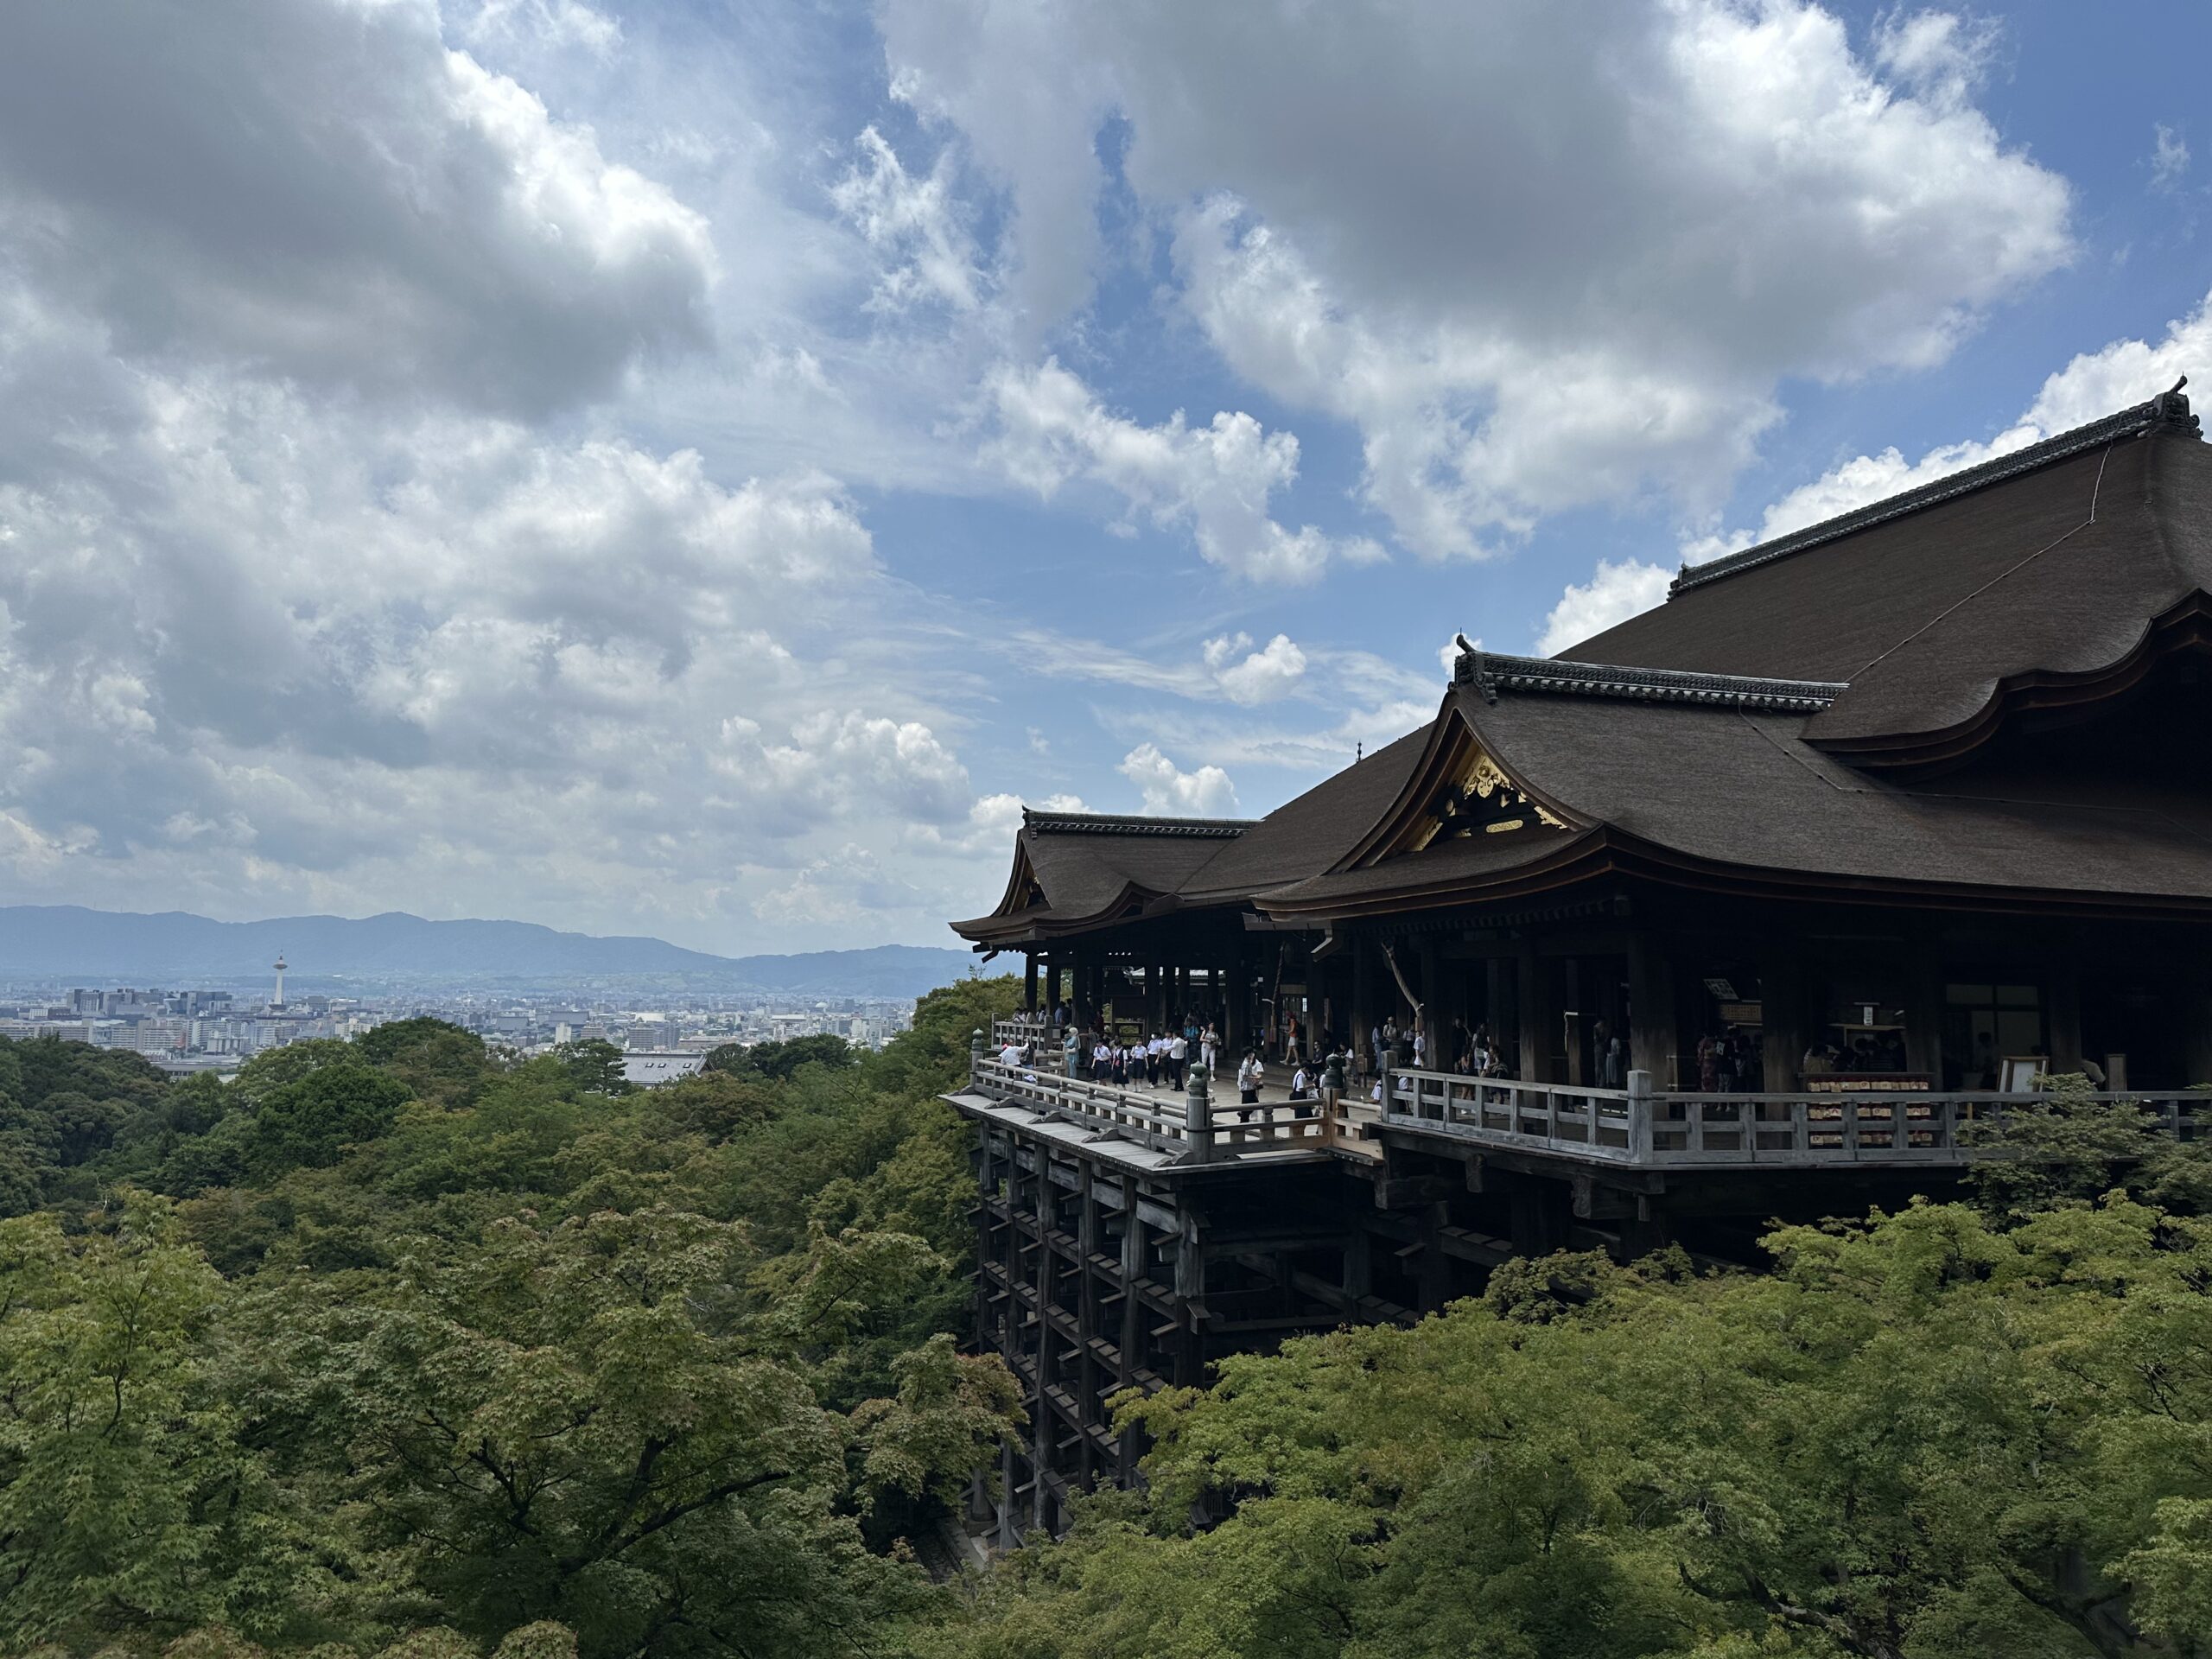 View on the main hall at Kiyomizu-dera temple.